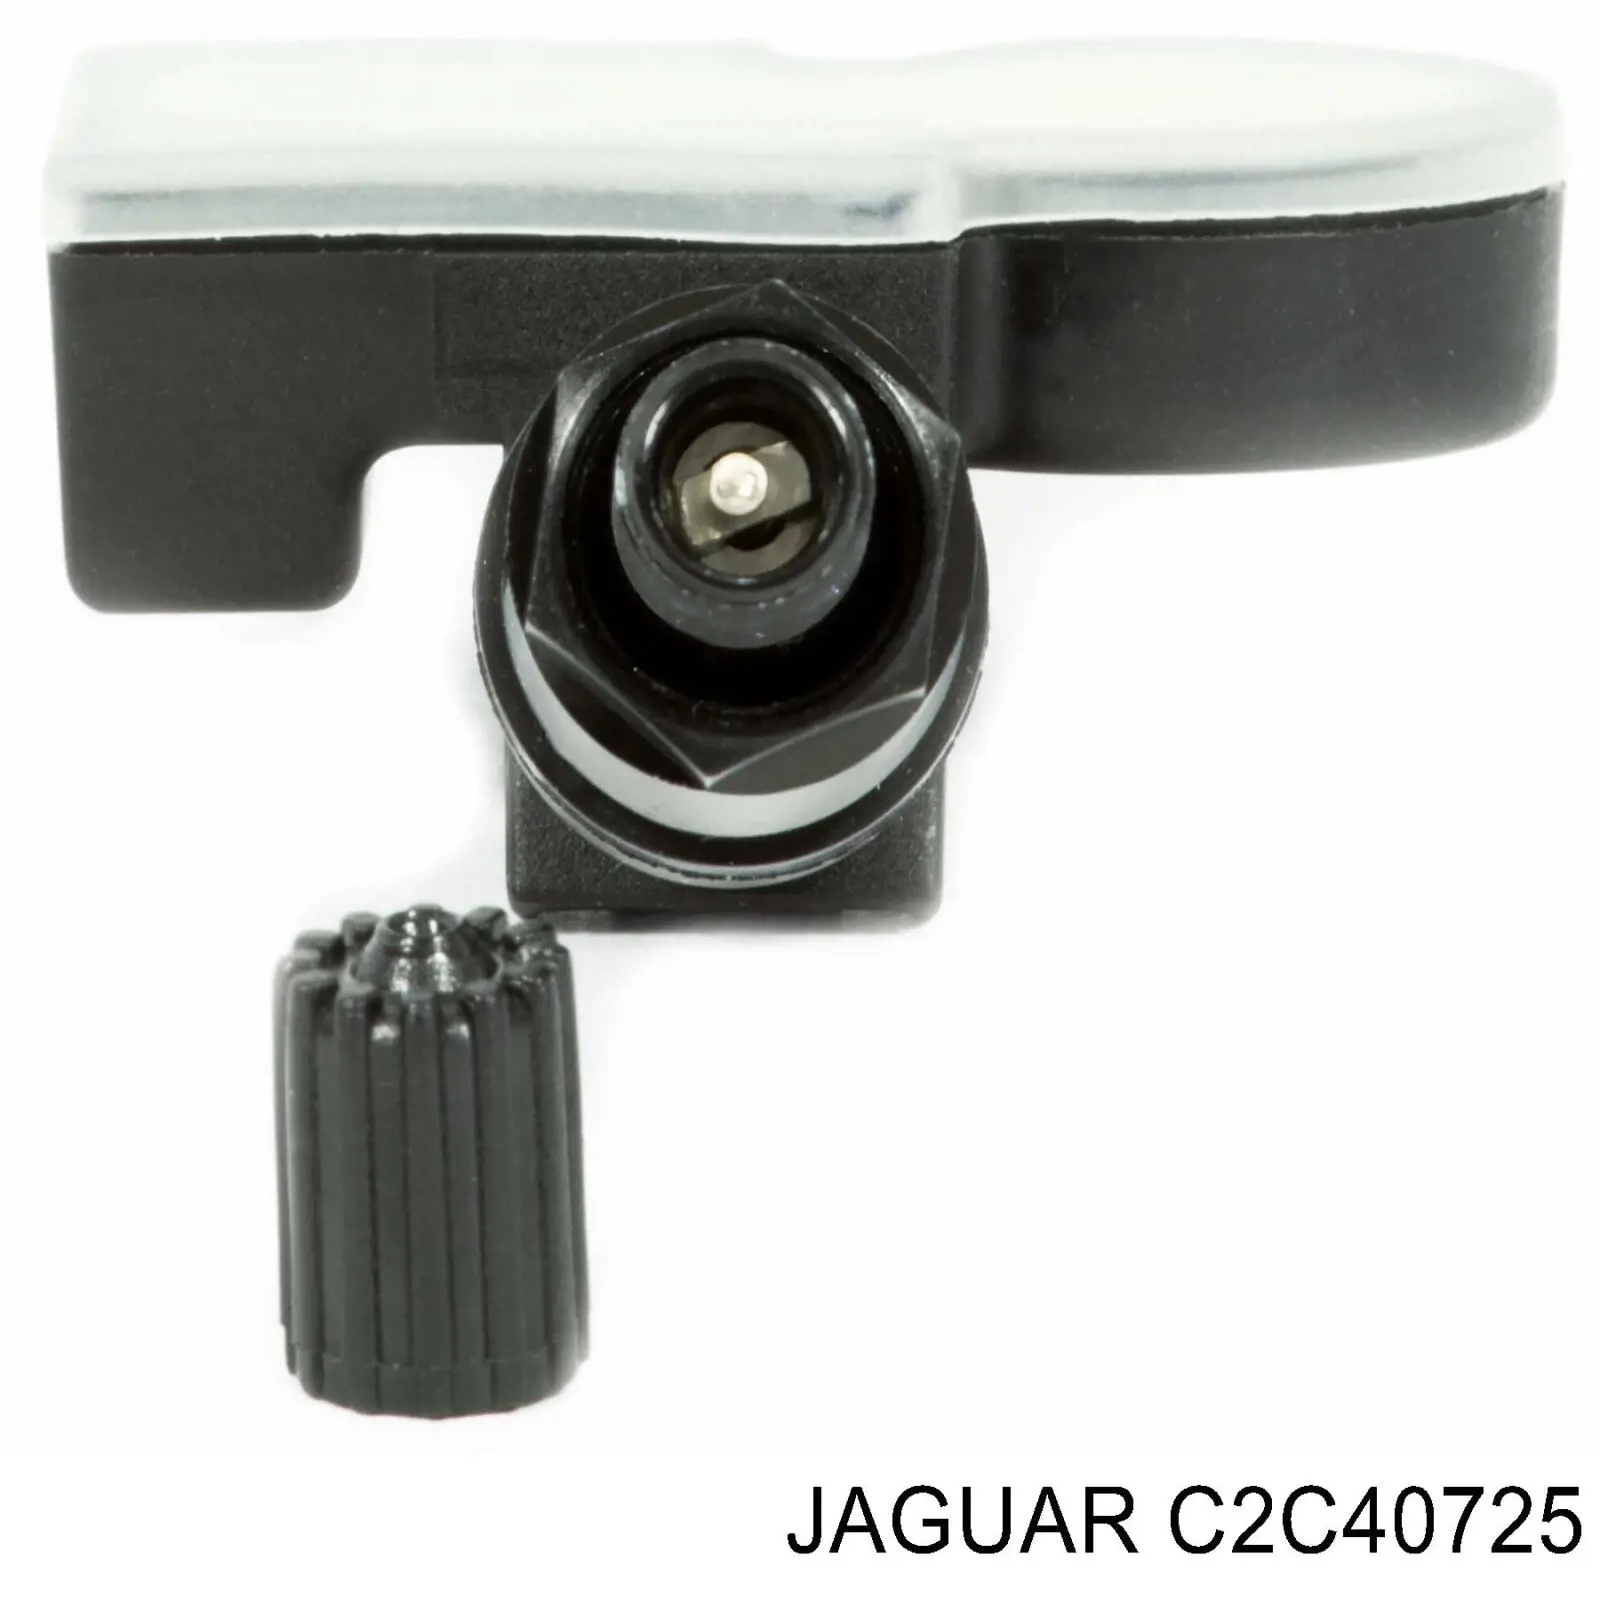 C2C40725 Jaguar sensor de presion de neumaticos